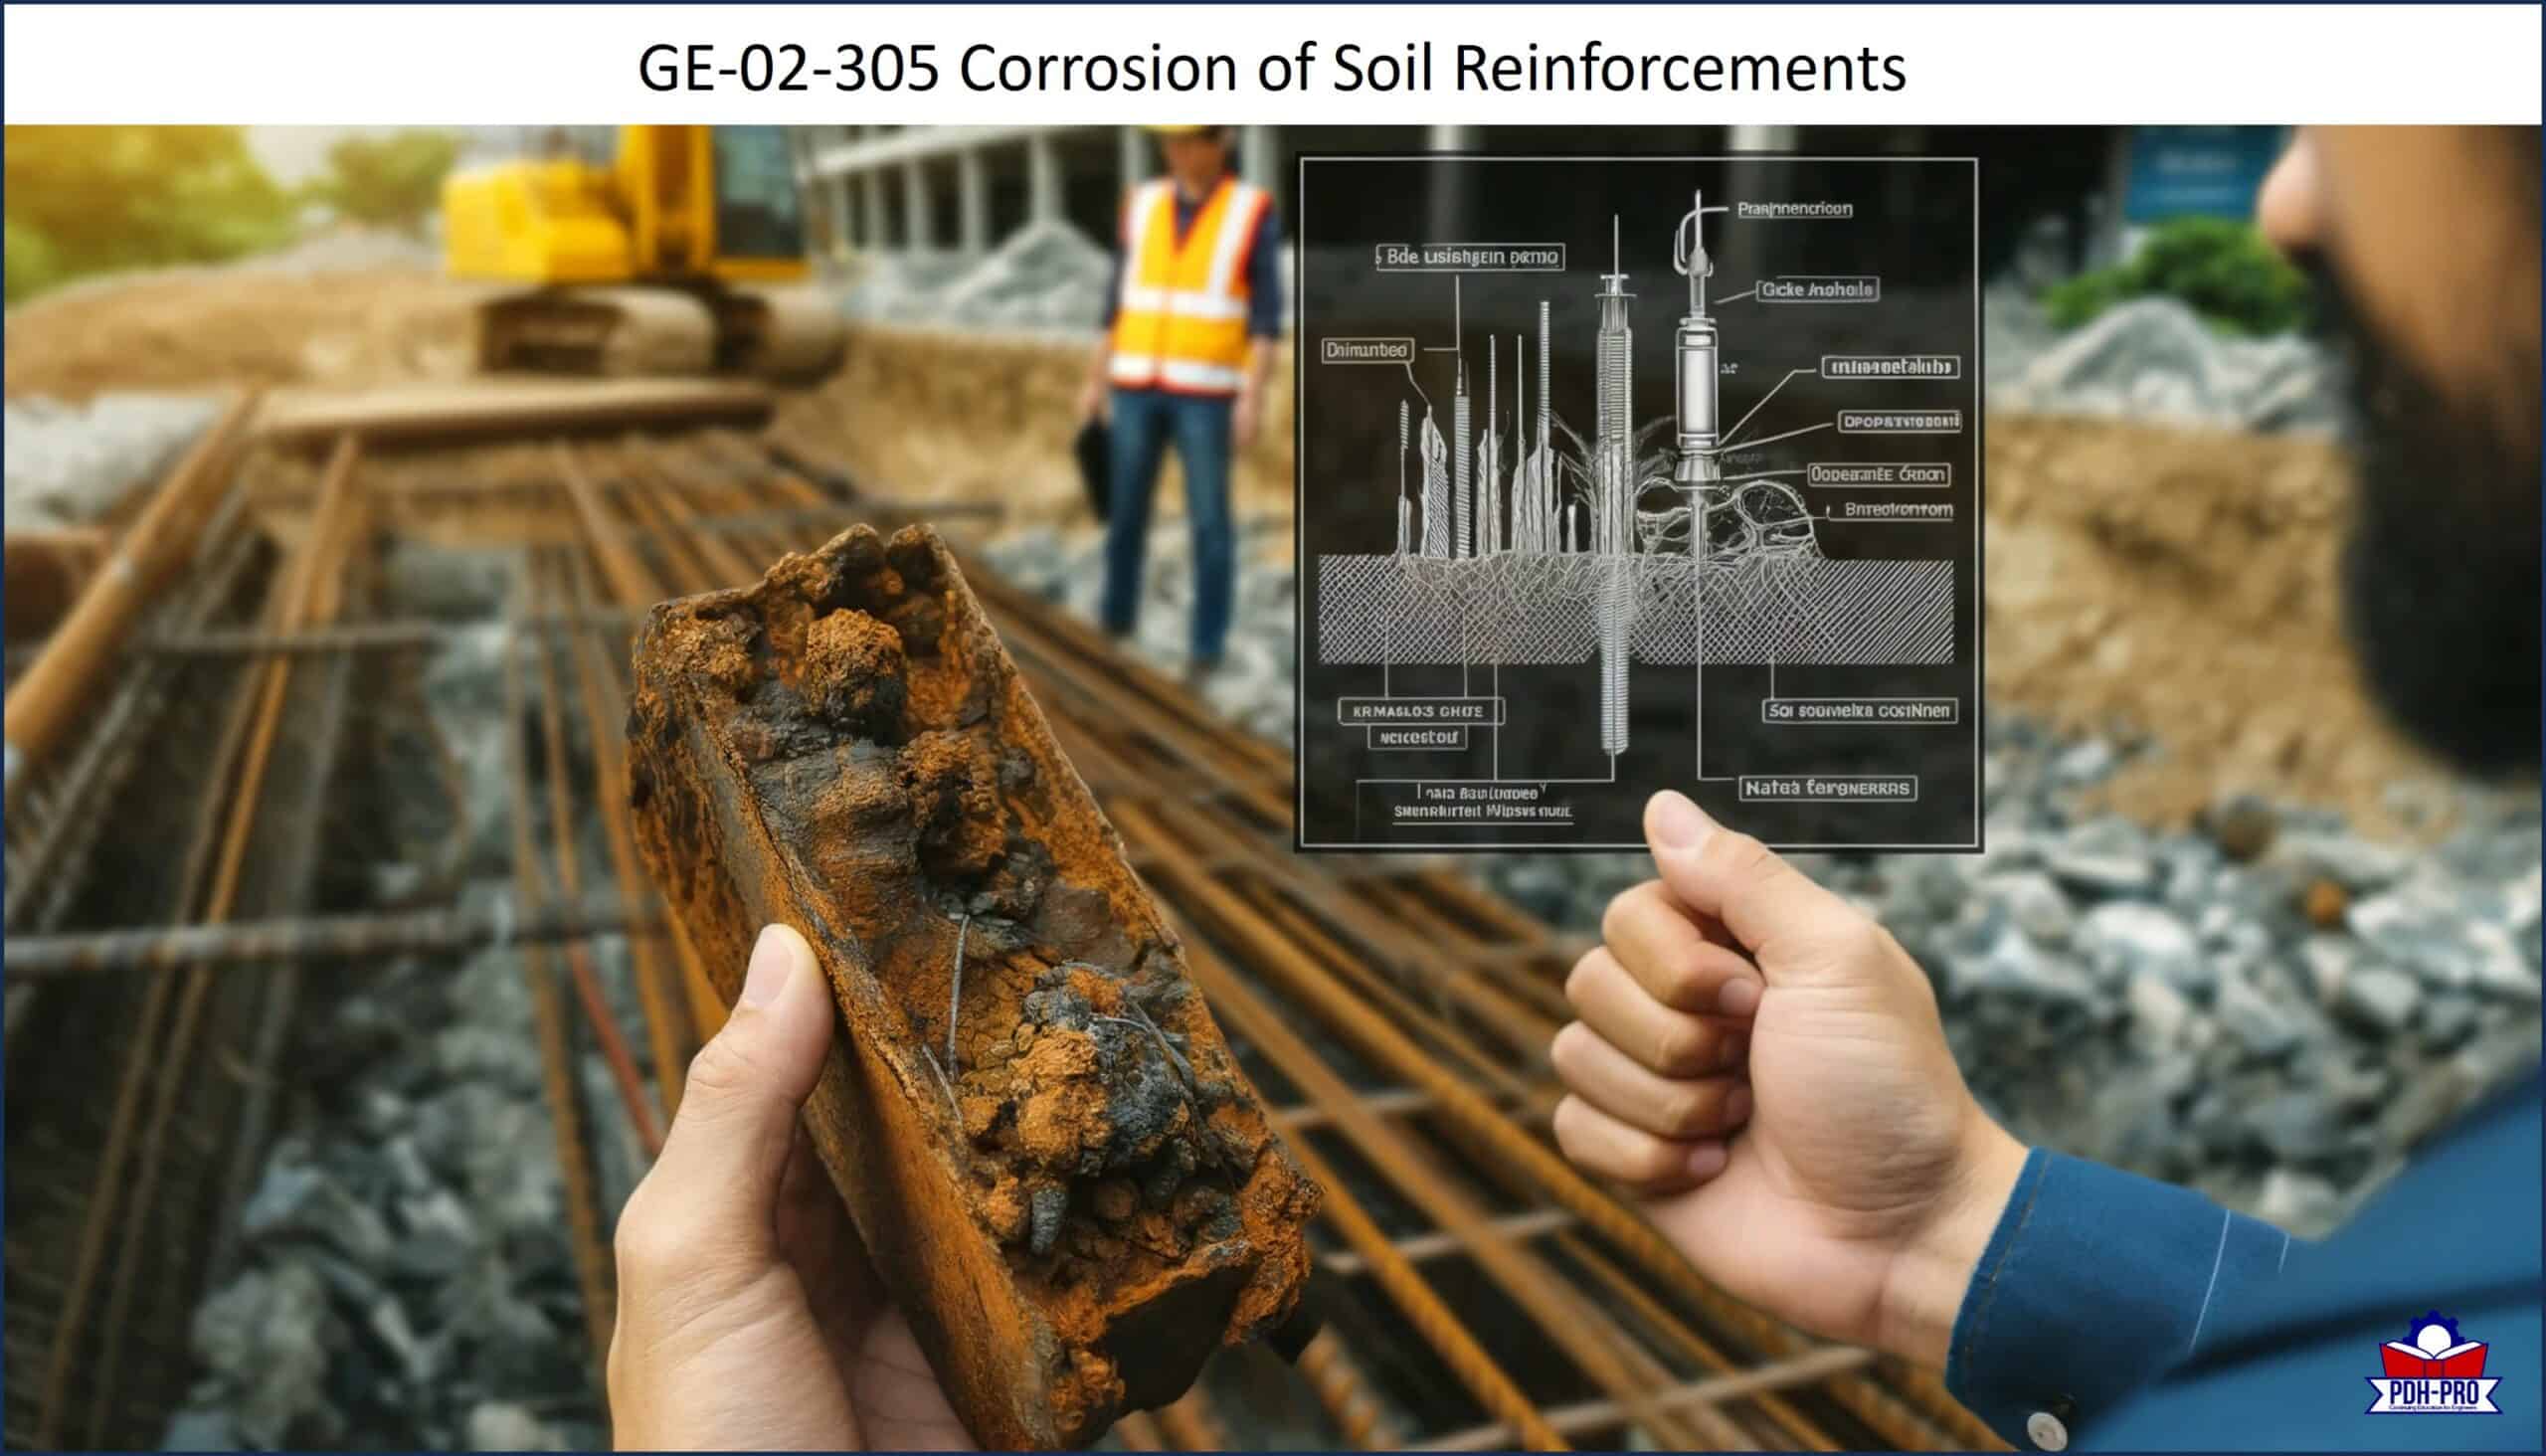 Corrosion of Soil Reinforcements